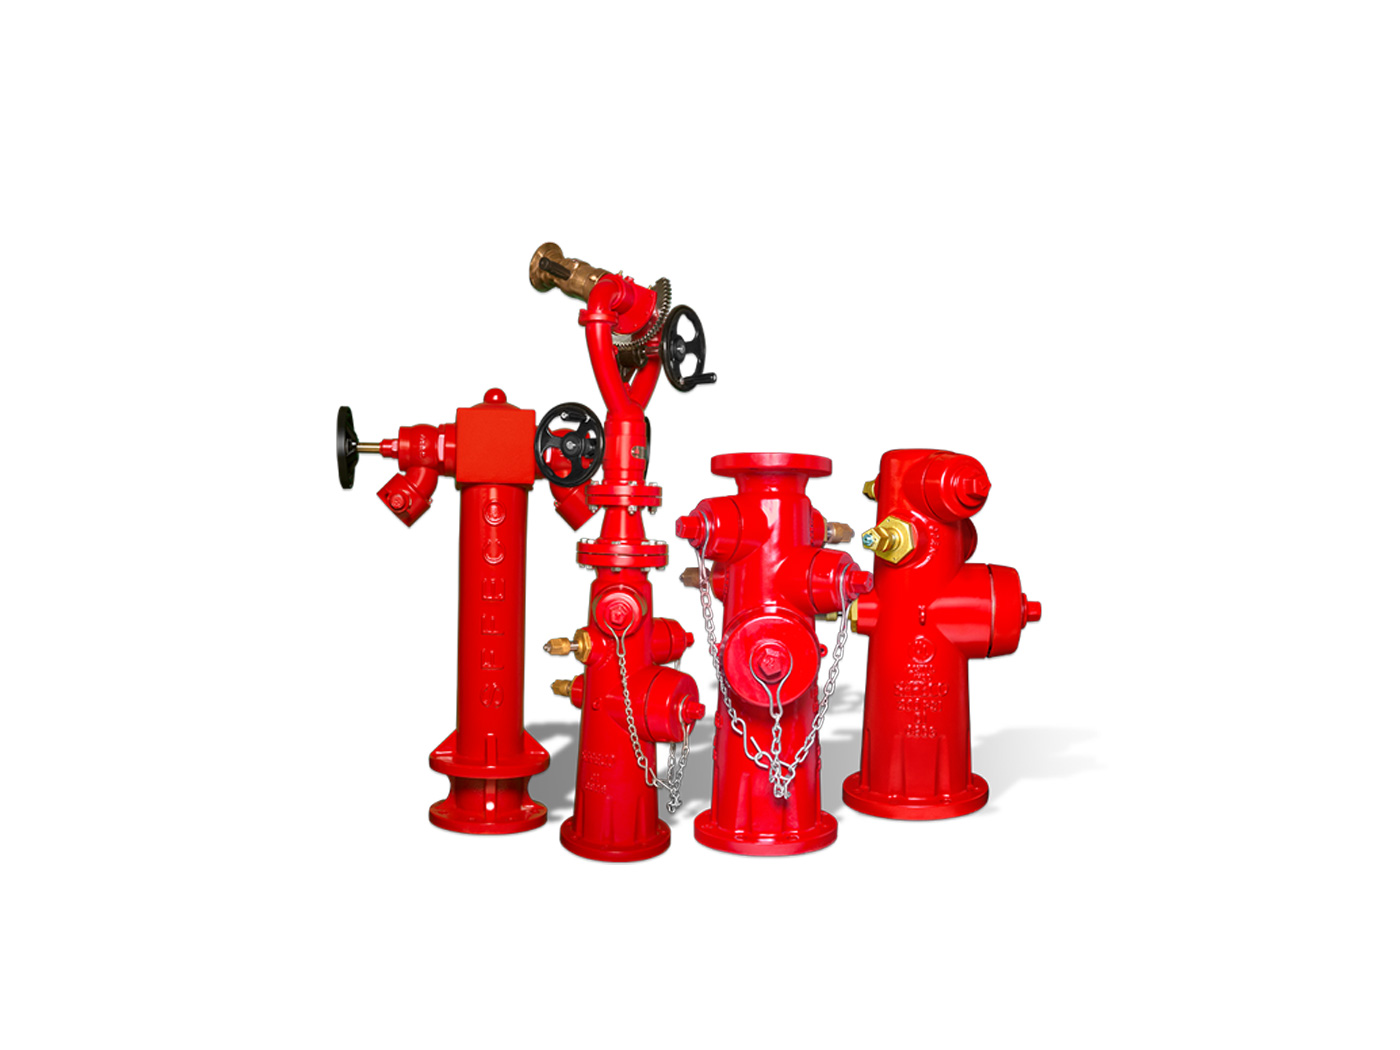 Fire Hydrants